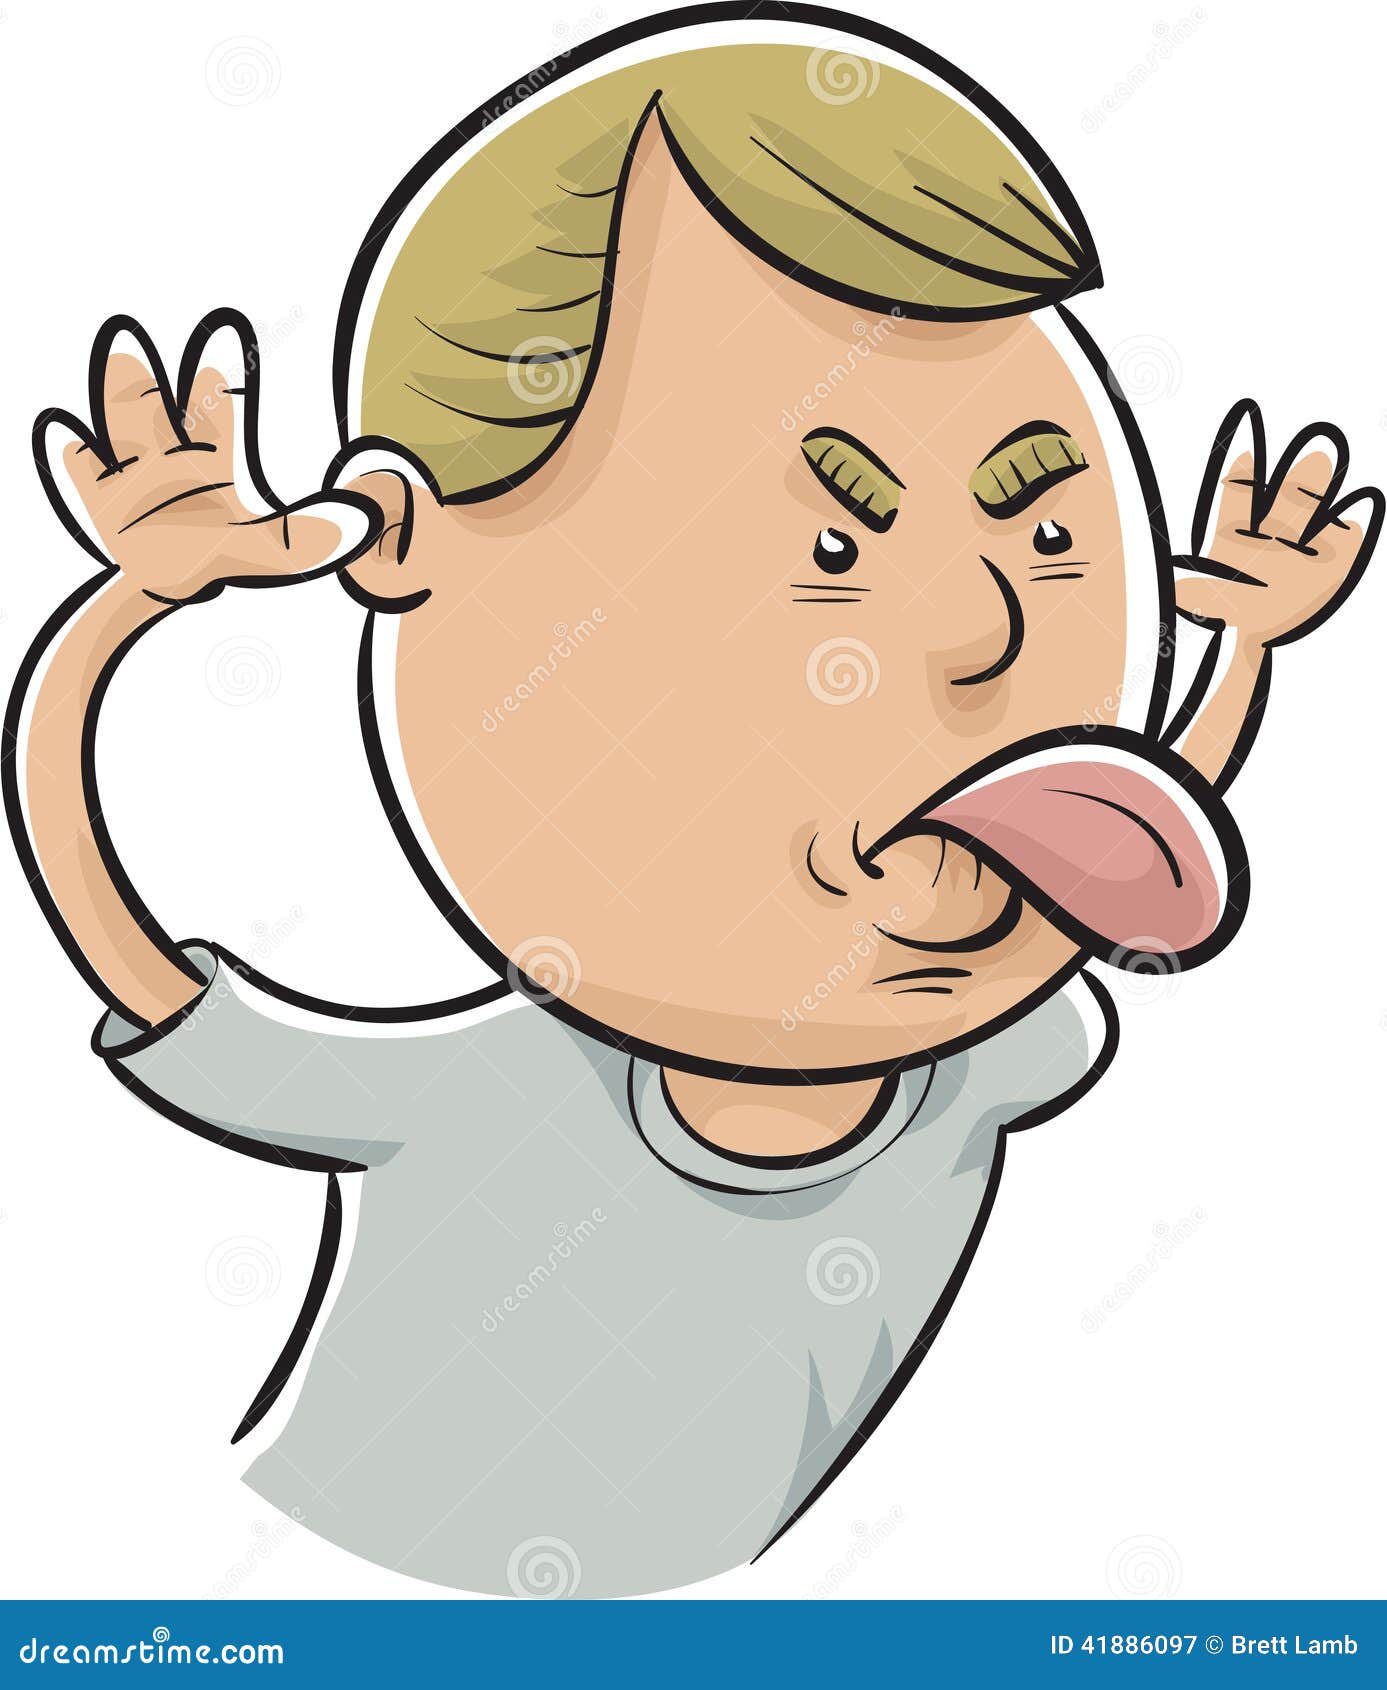 sticking-out-tongue-cartoon-boy-sticks-his-as-insult-41886097.jpg